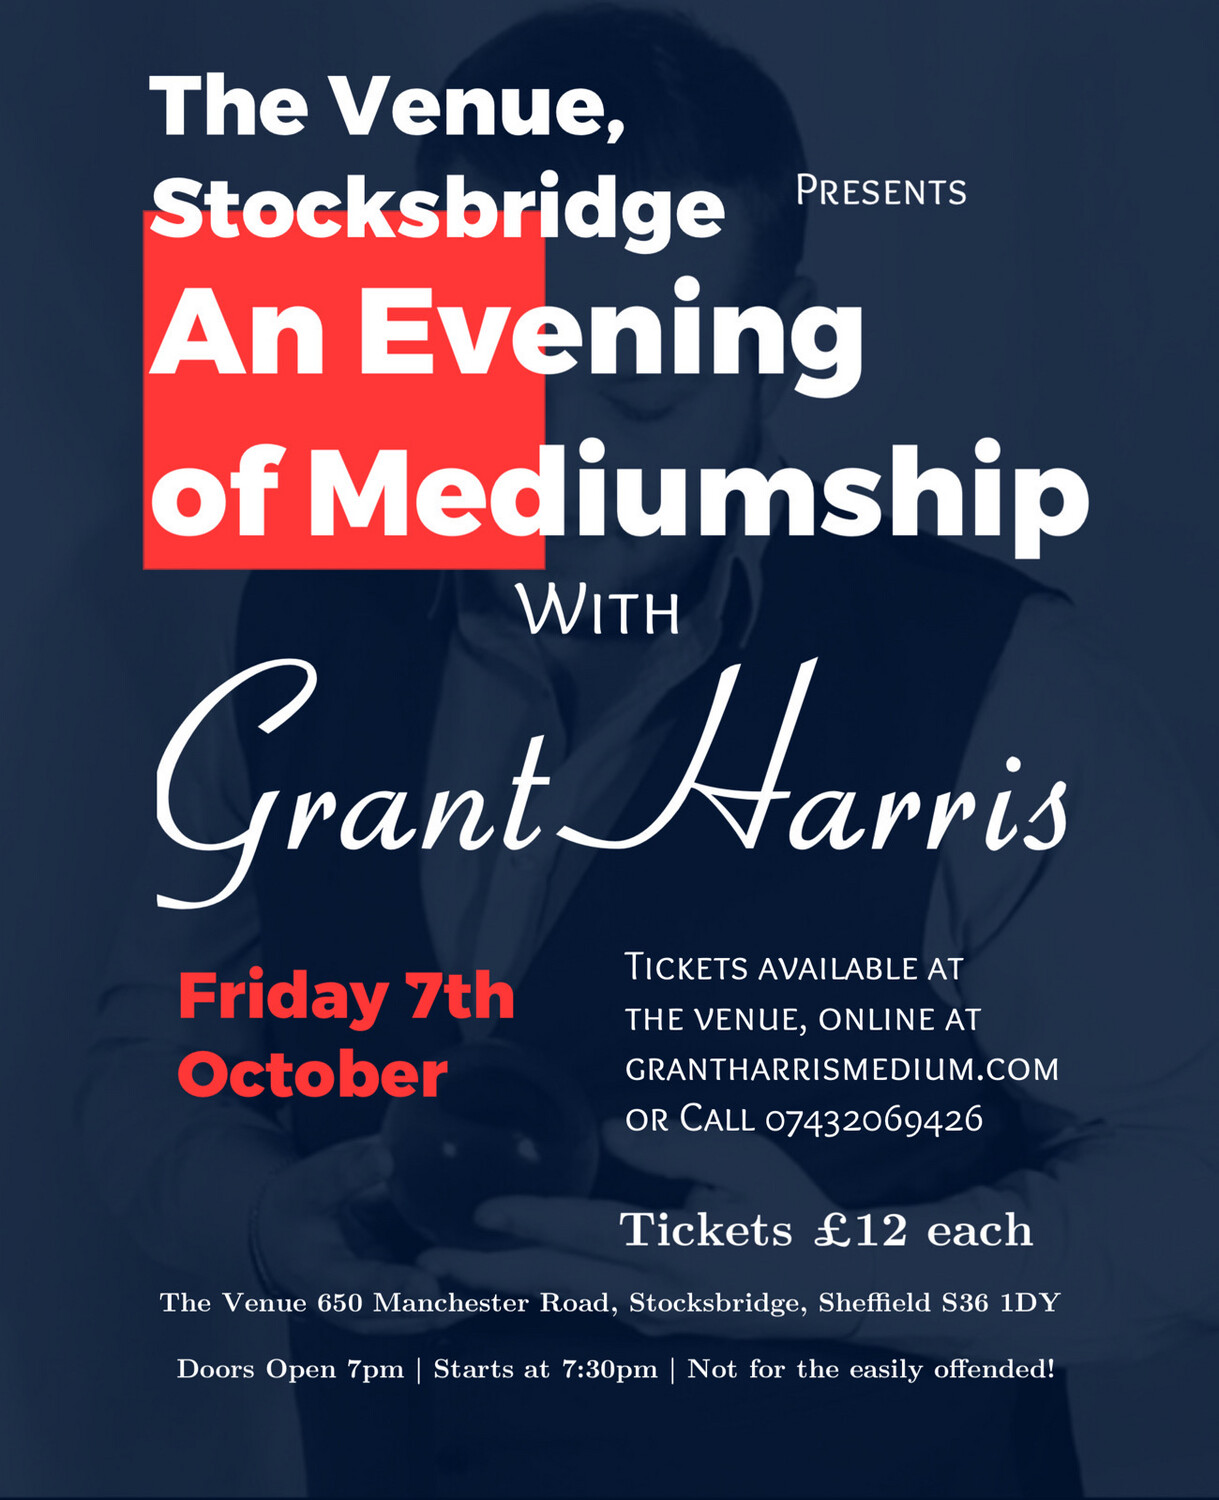 Evening of Mediumship, The Venue, Stocksbridge, Friday 7th October 2022